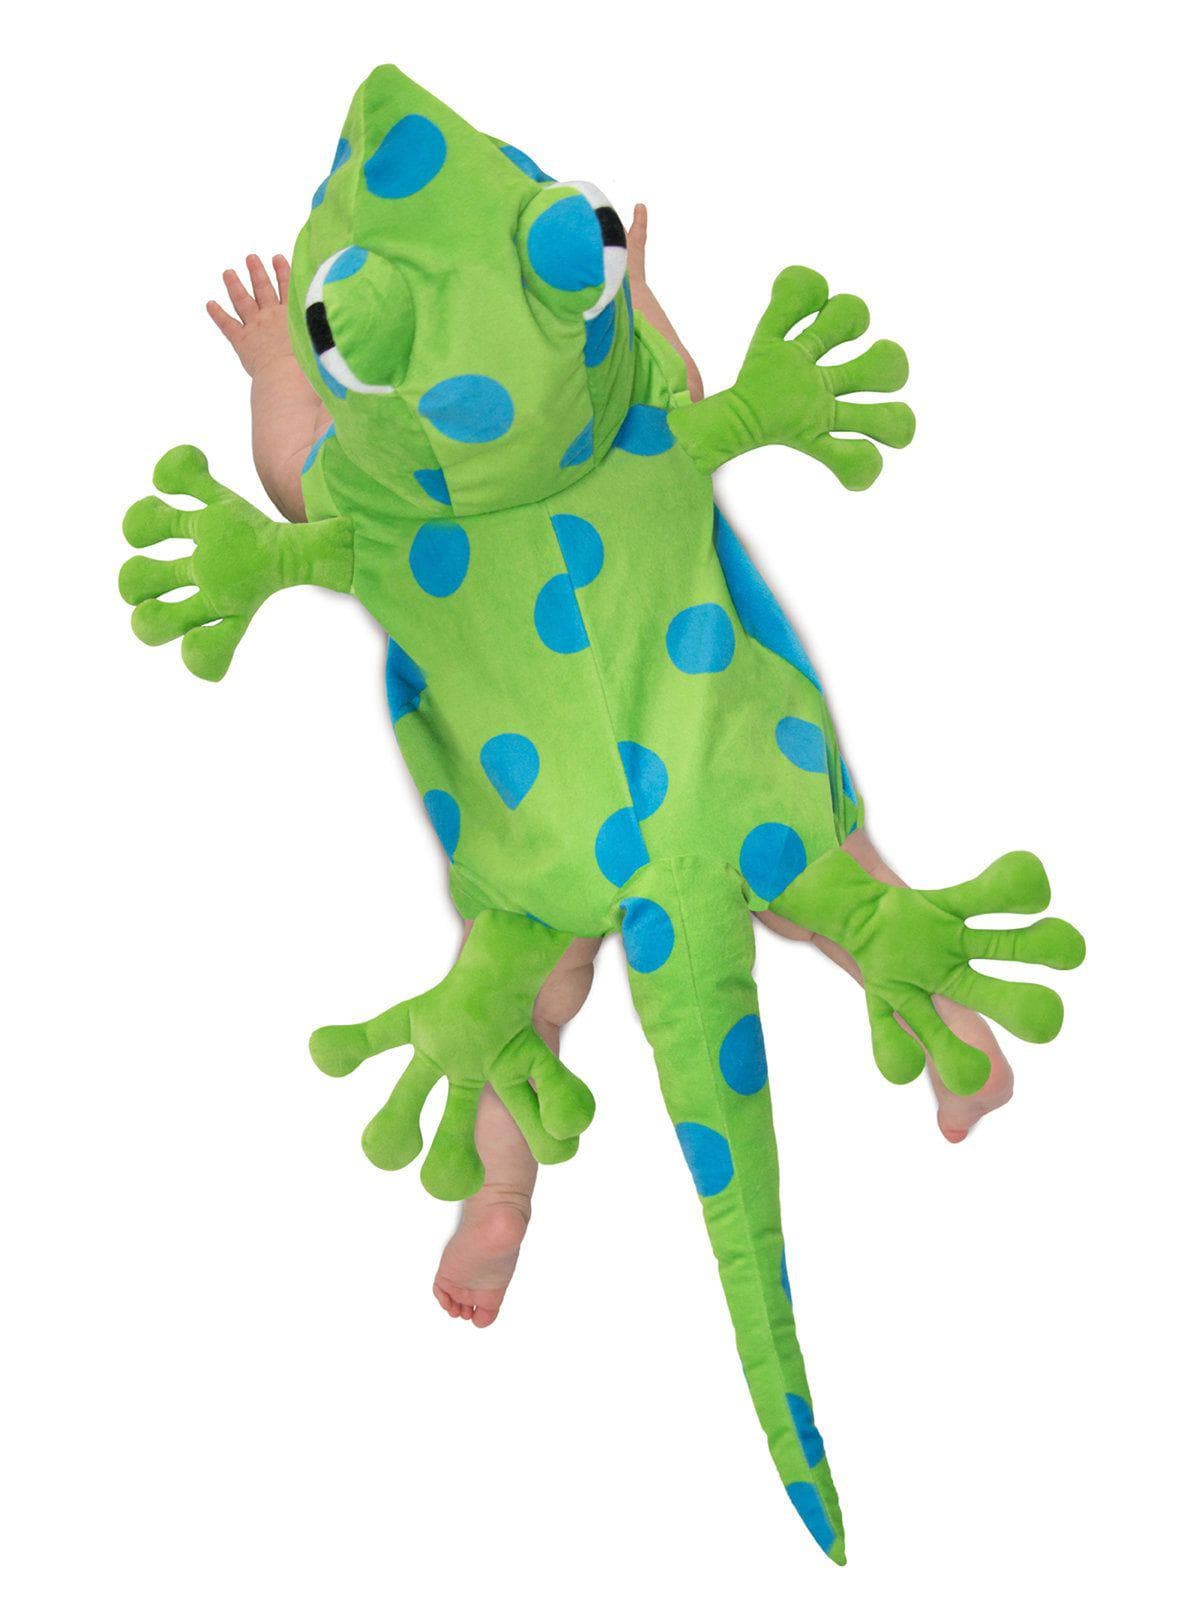 Baby/Toddler Zippy the Gecko Costume - costumes.com